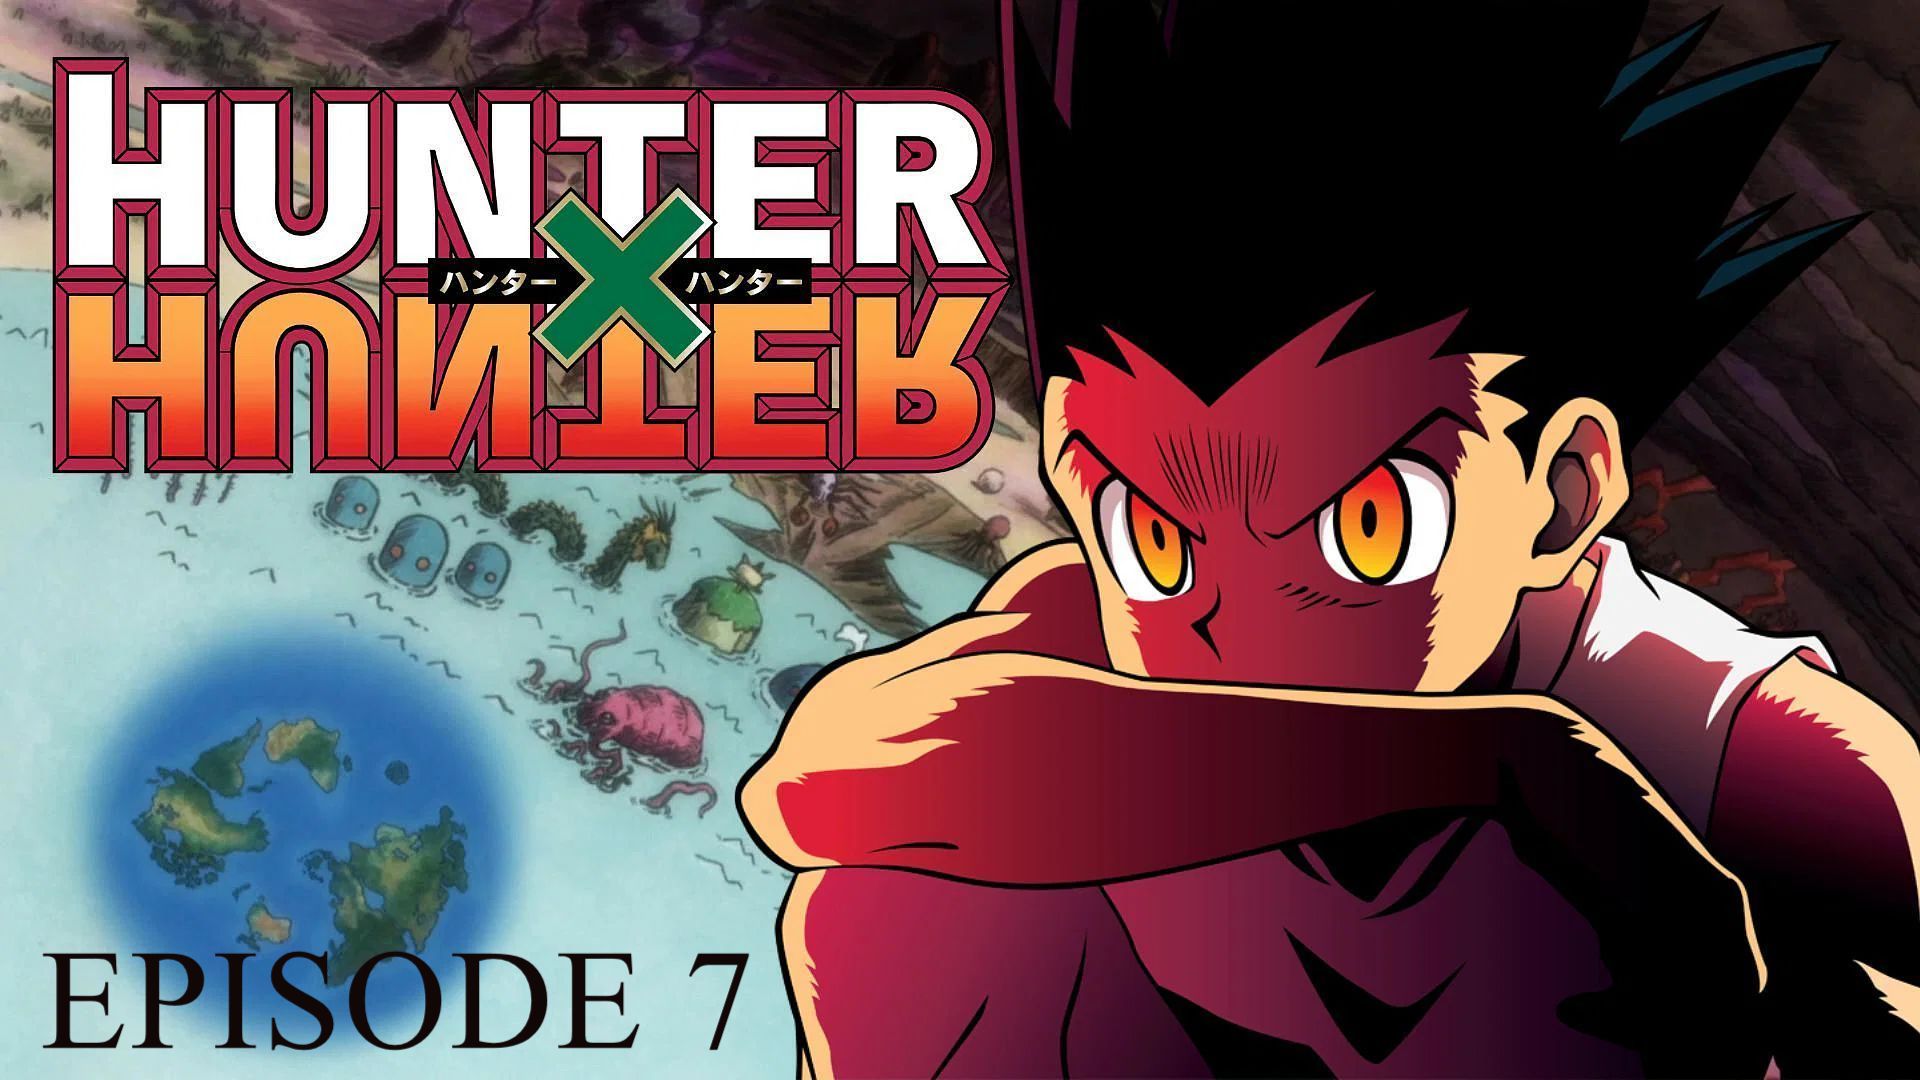 Watch Hunter X Hunter Season 1, Episode 7: A Showdown x on x the